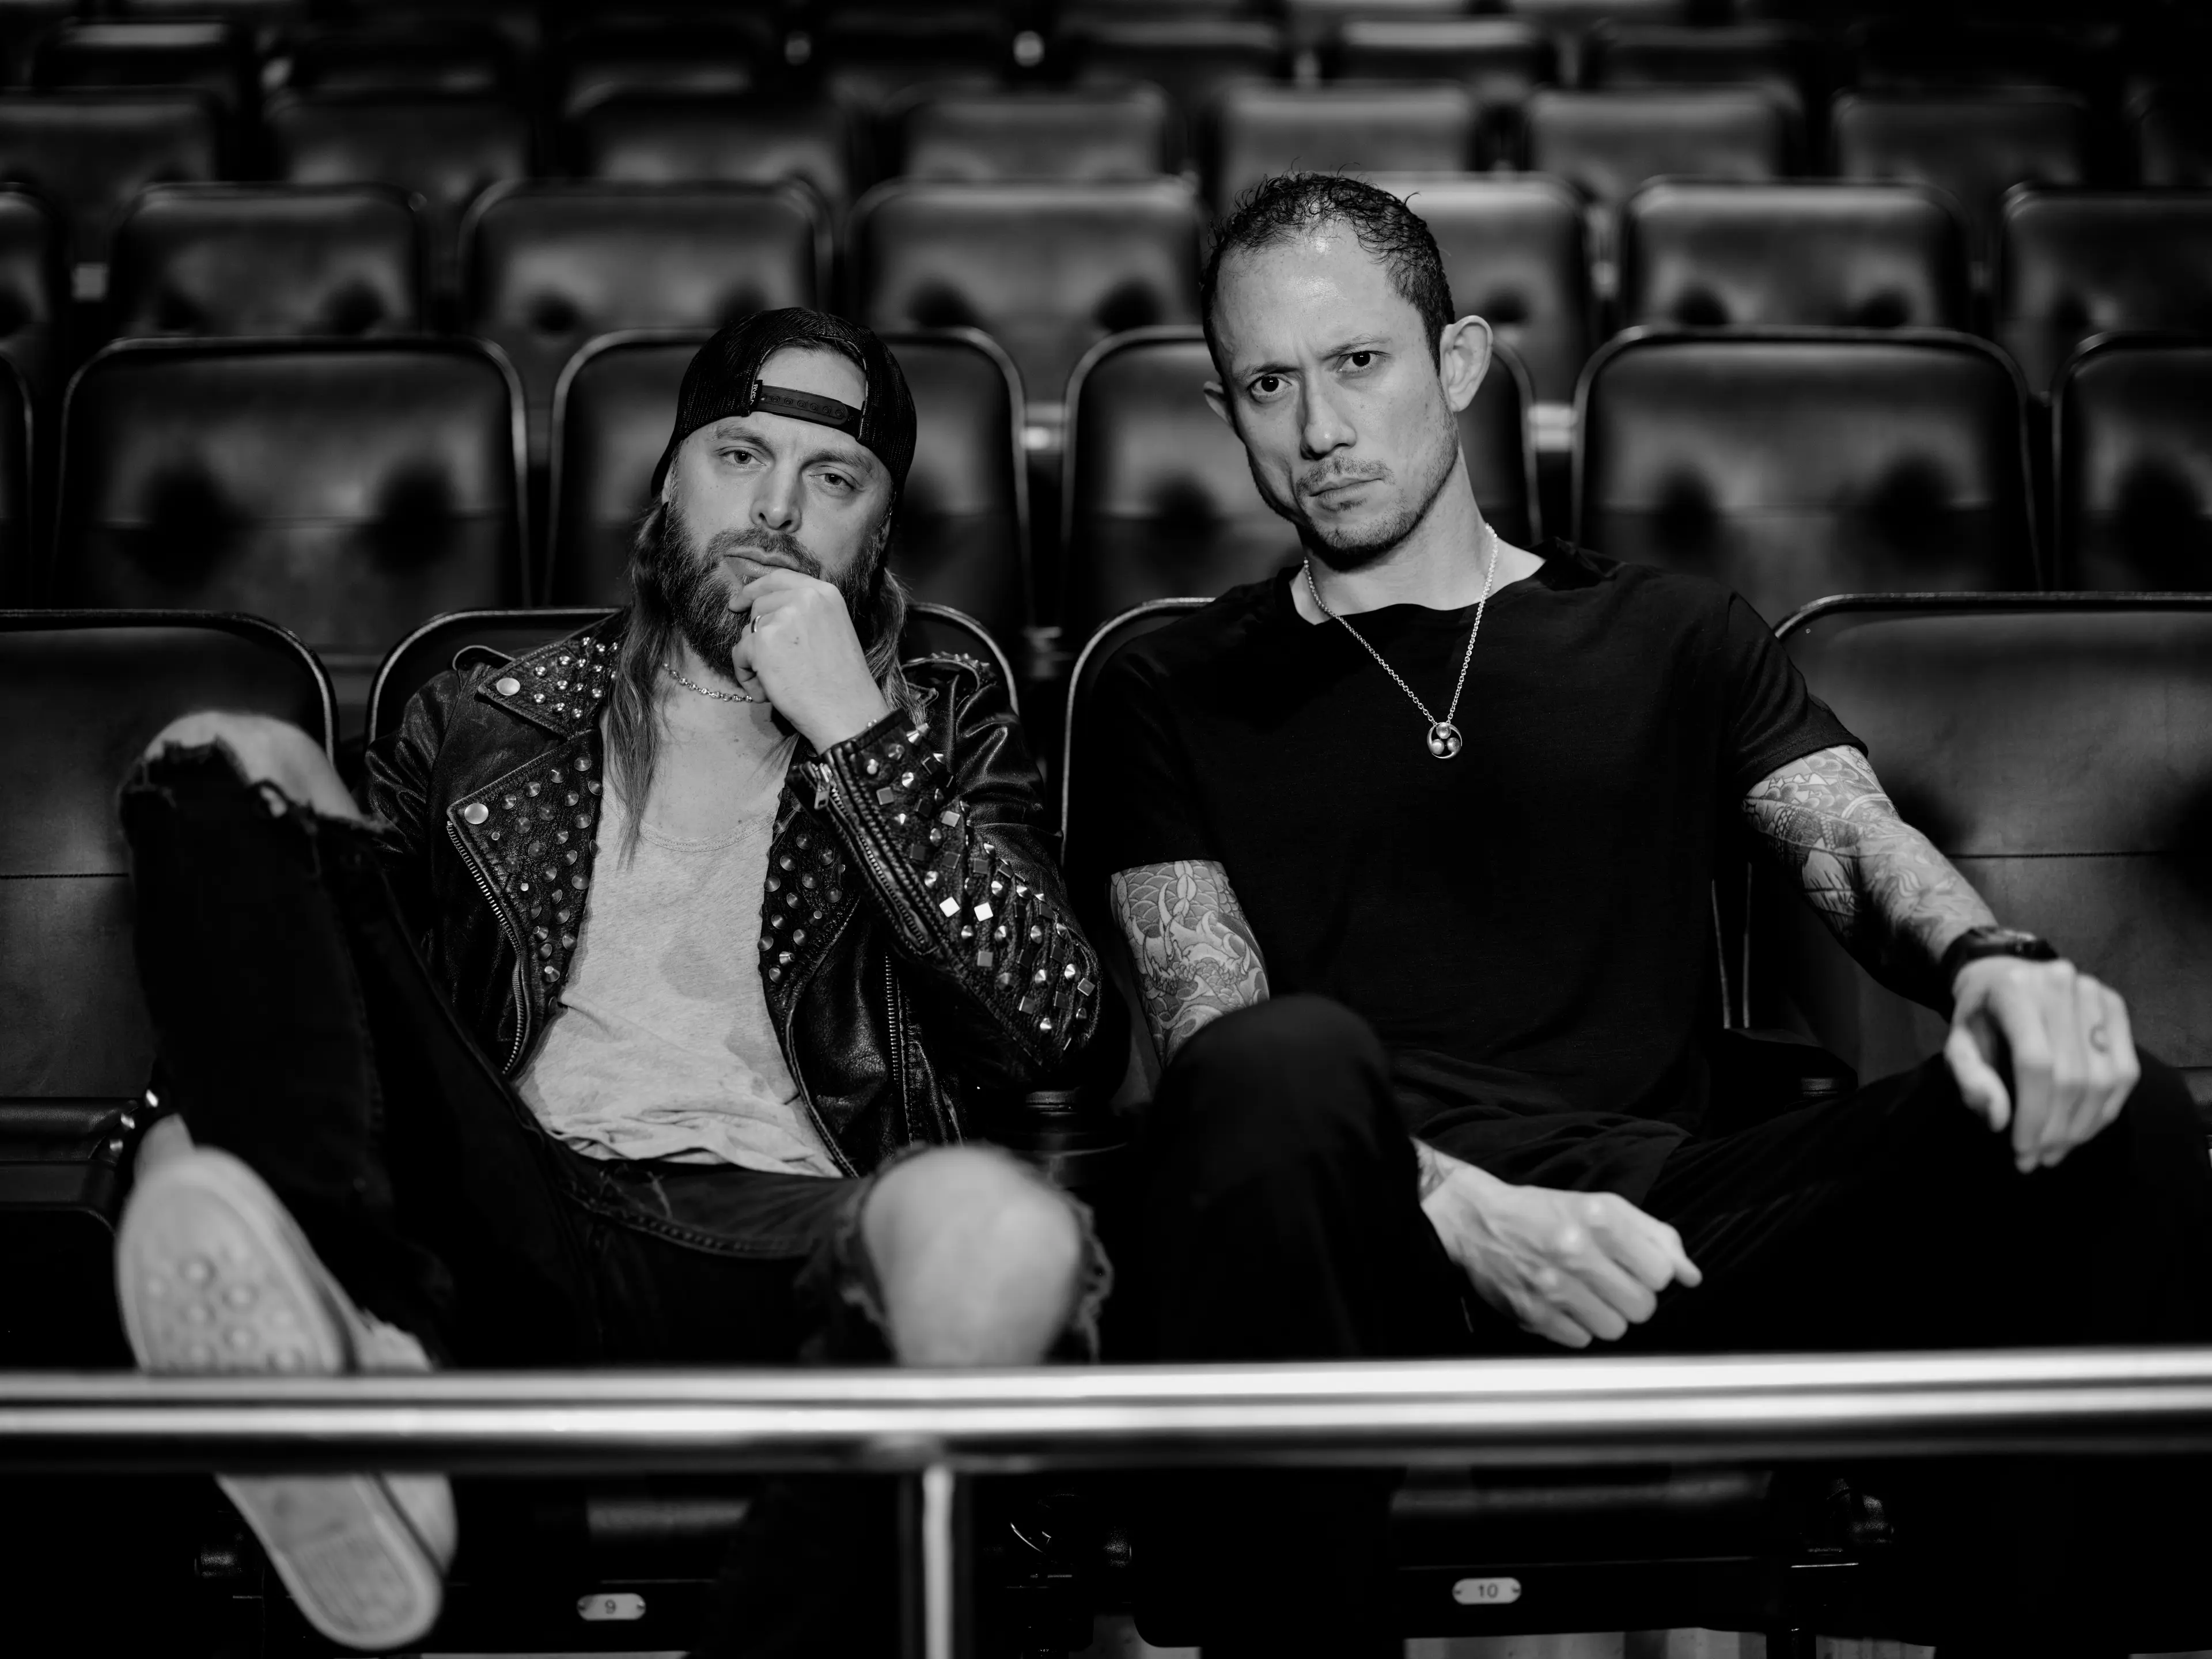 Bullet For My Valentine & Trivium - The Poisoned Ascendancy UK Tour 2025